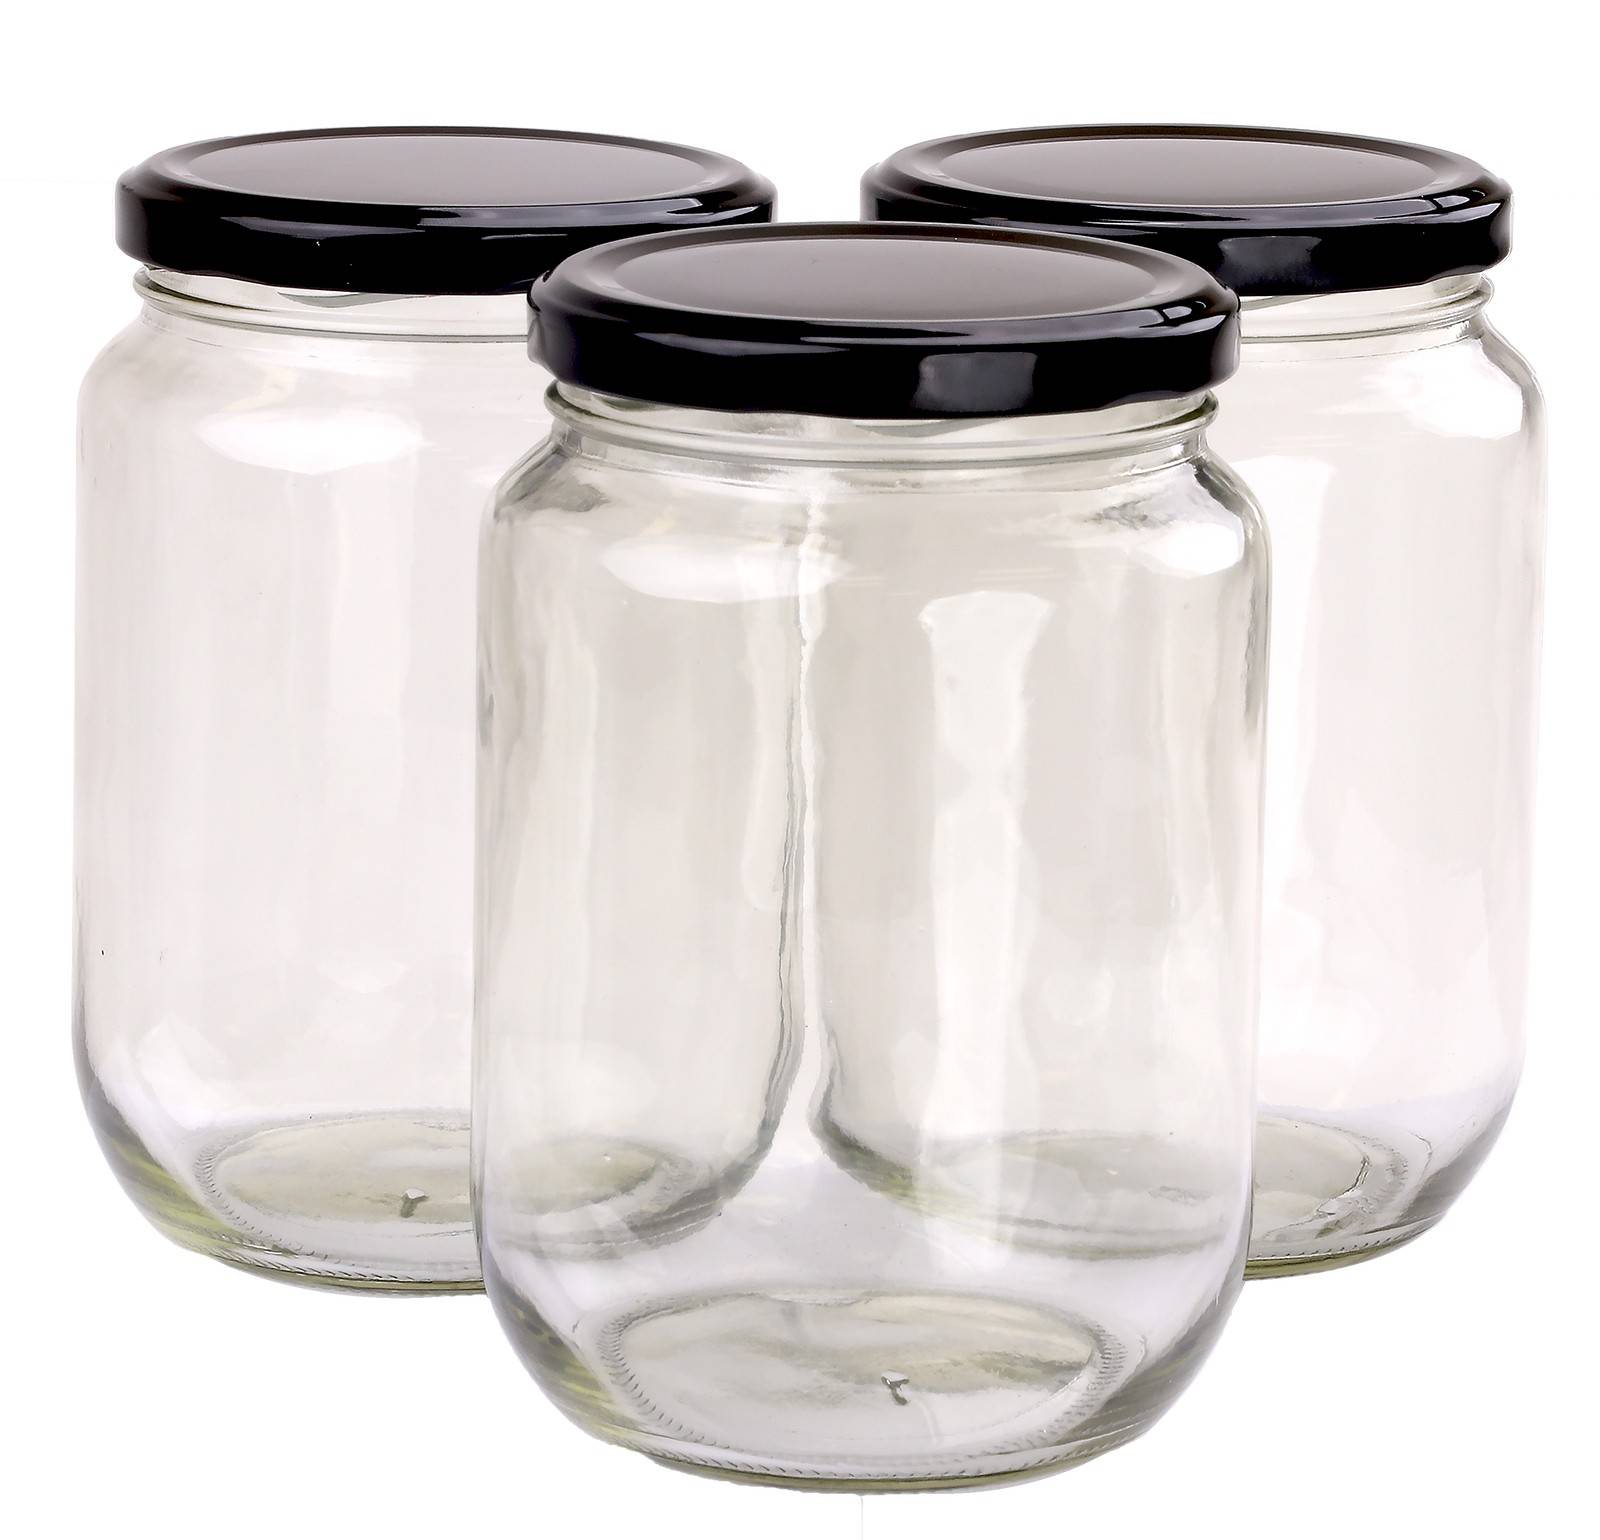 travel size oz jars